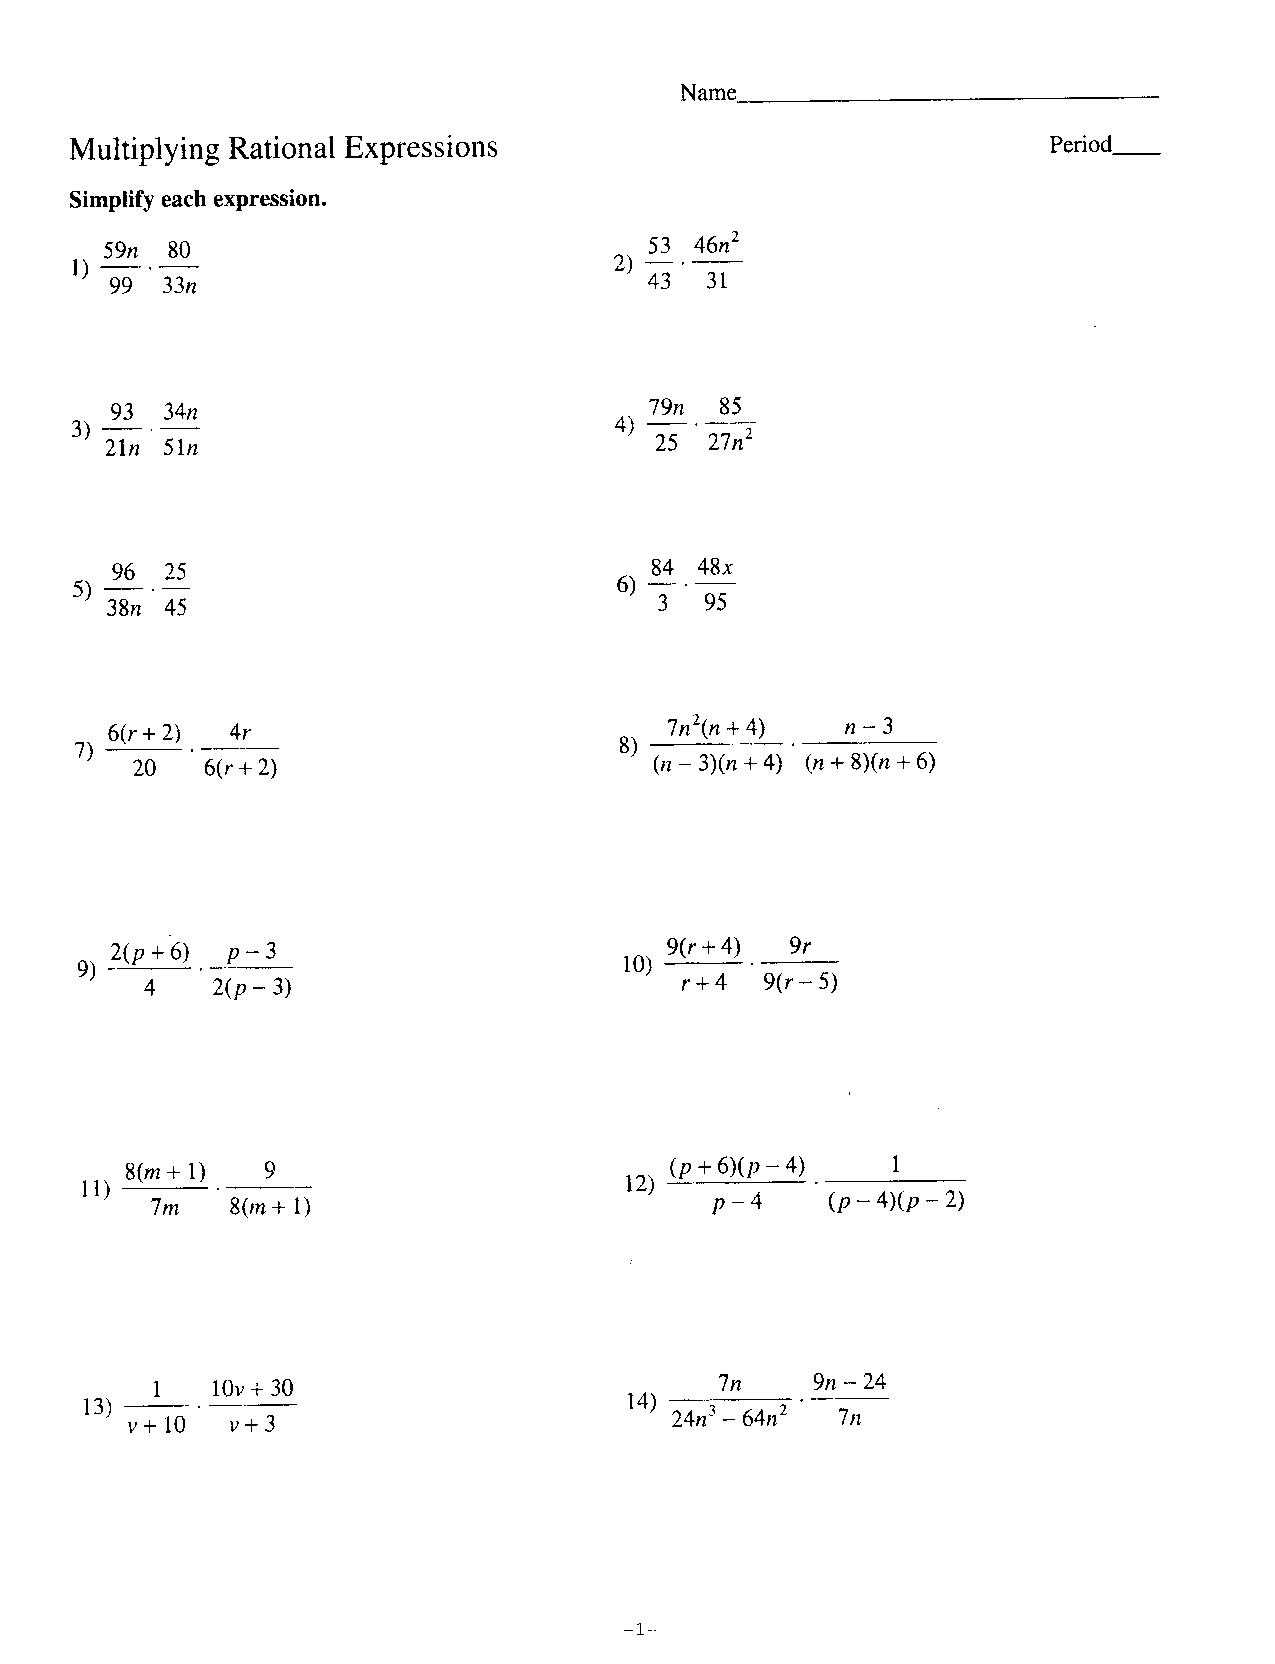 Rational Expressions Worksheet Algebra 2 as Well as Multiplying Rational Expressions Worksheet the Best Worksheets Image